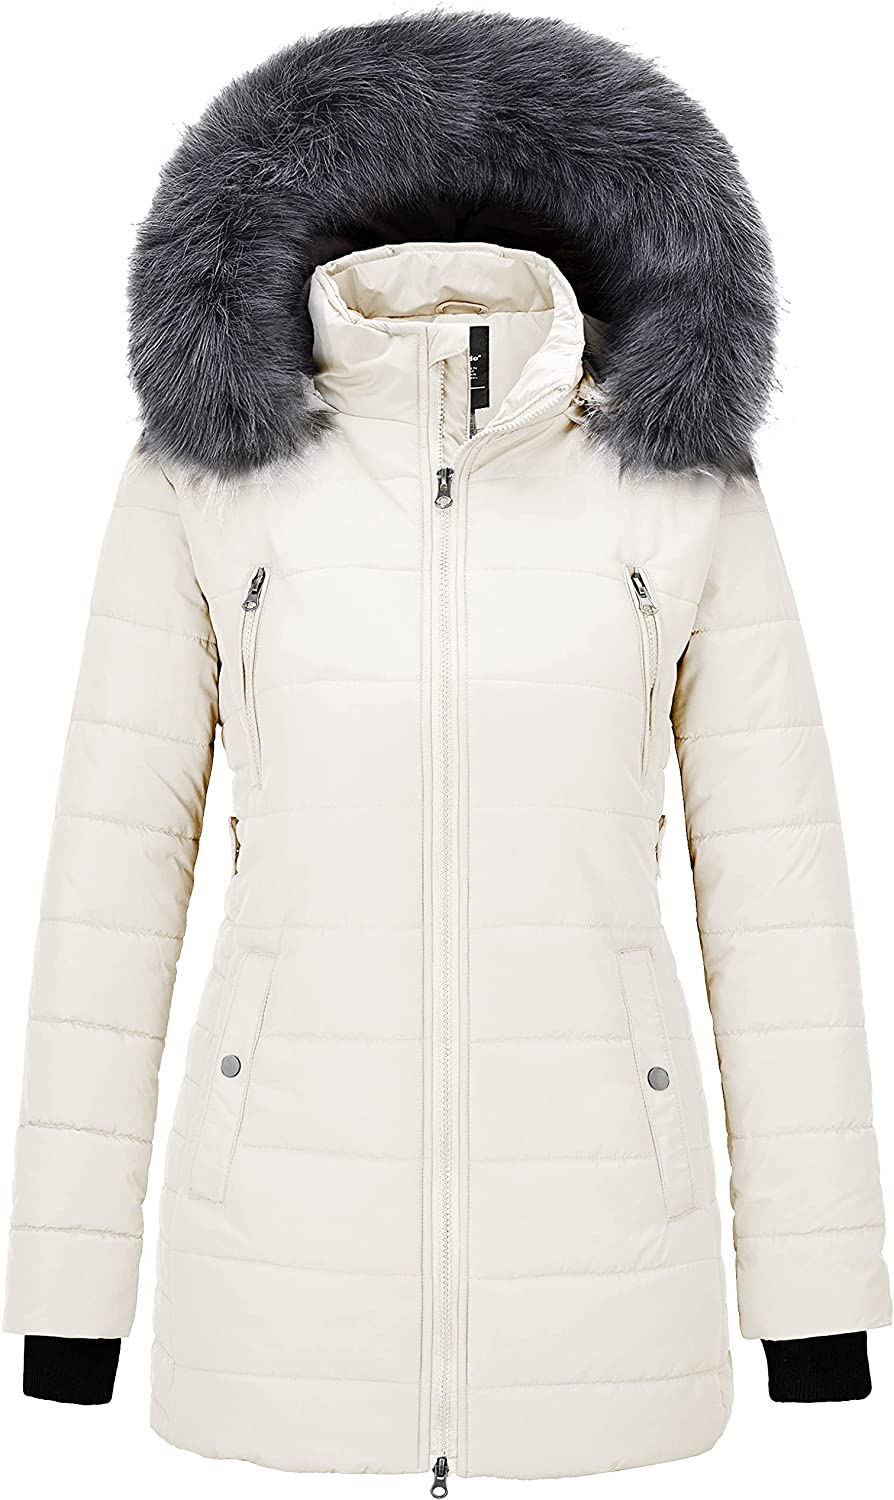 Wantdo Women's Warm Winter Coat Thicken Puffer Jacket Quilted Parka ...